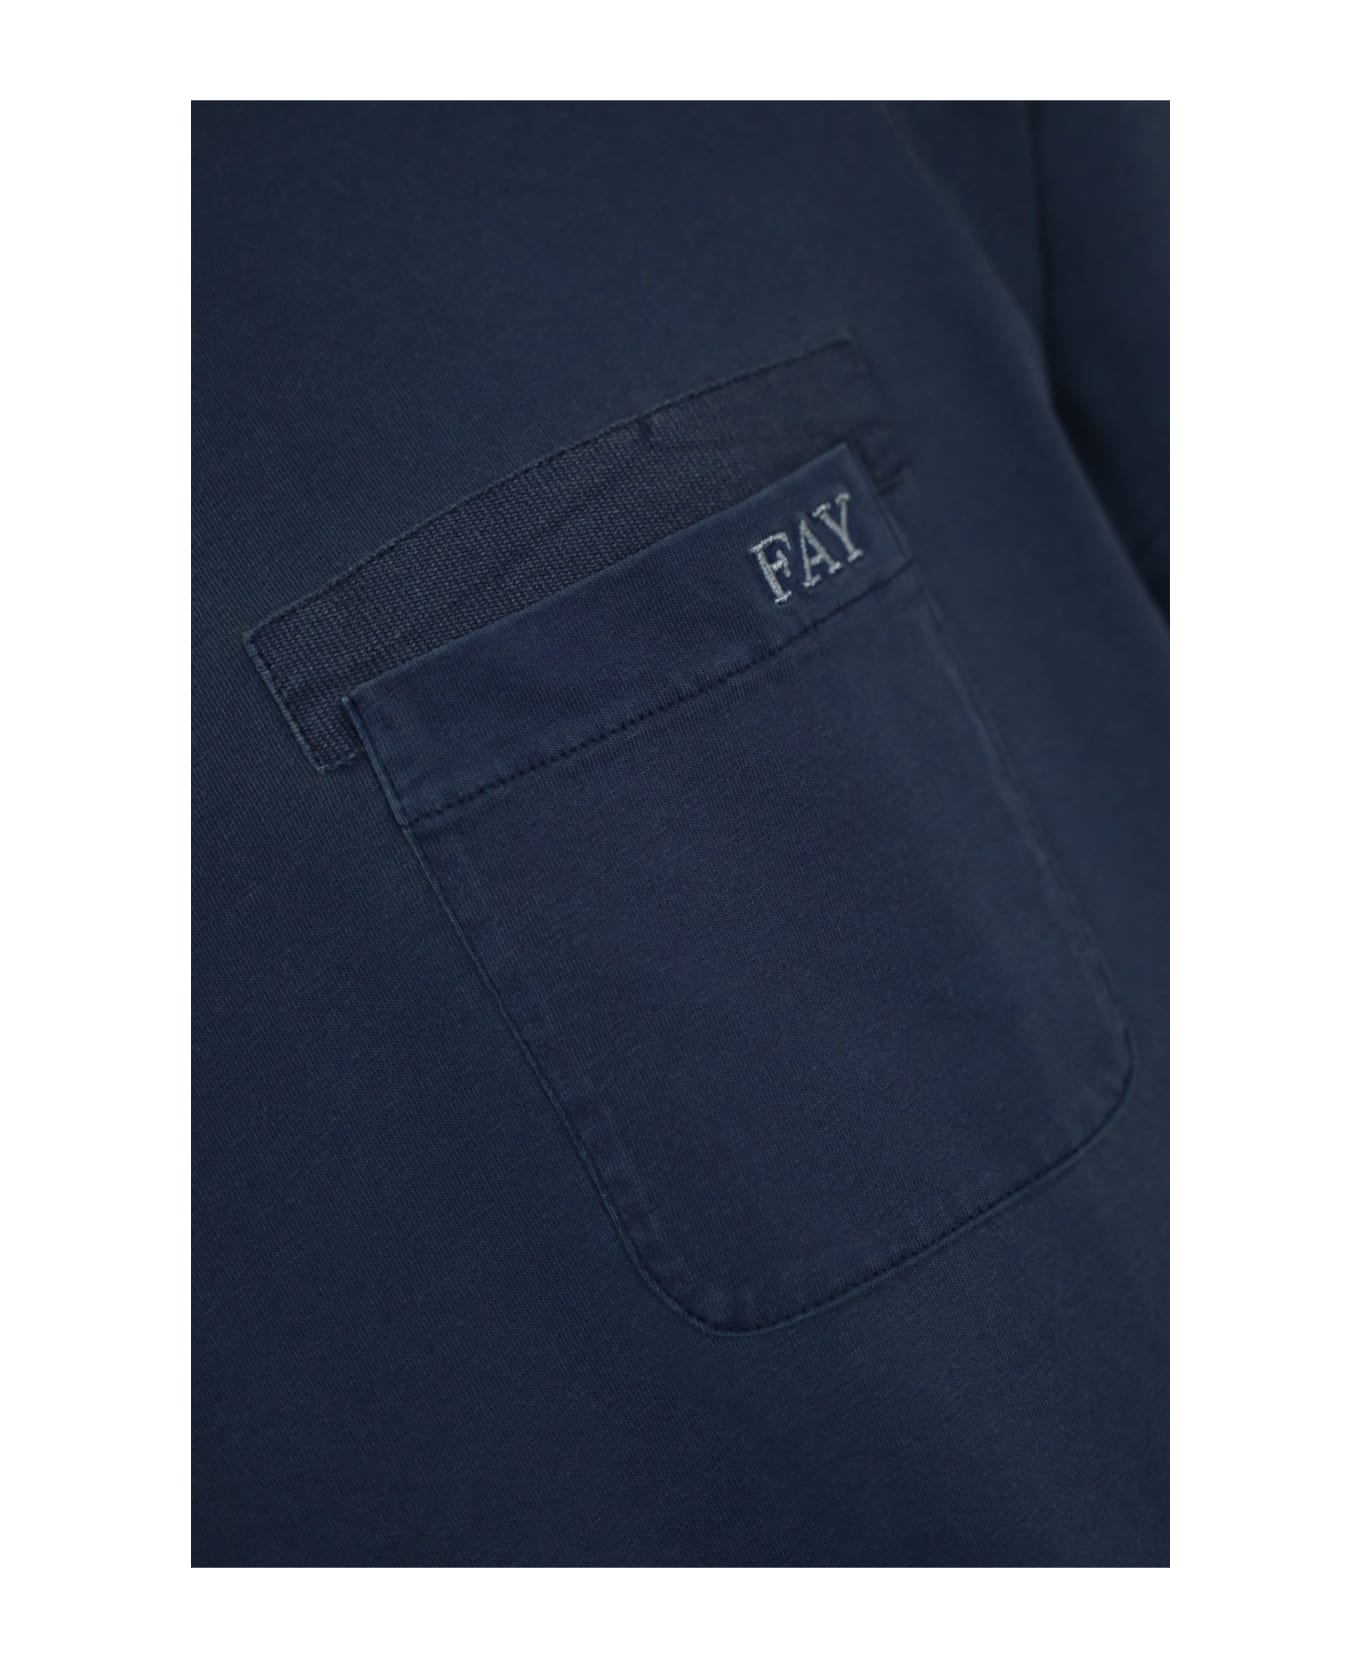 Fay T-shirt With Pocket - Blu